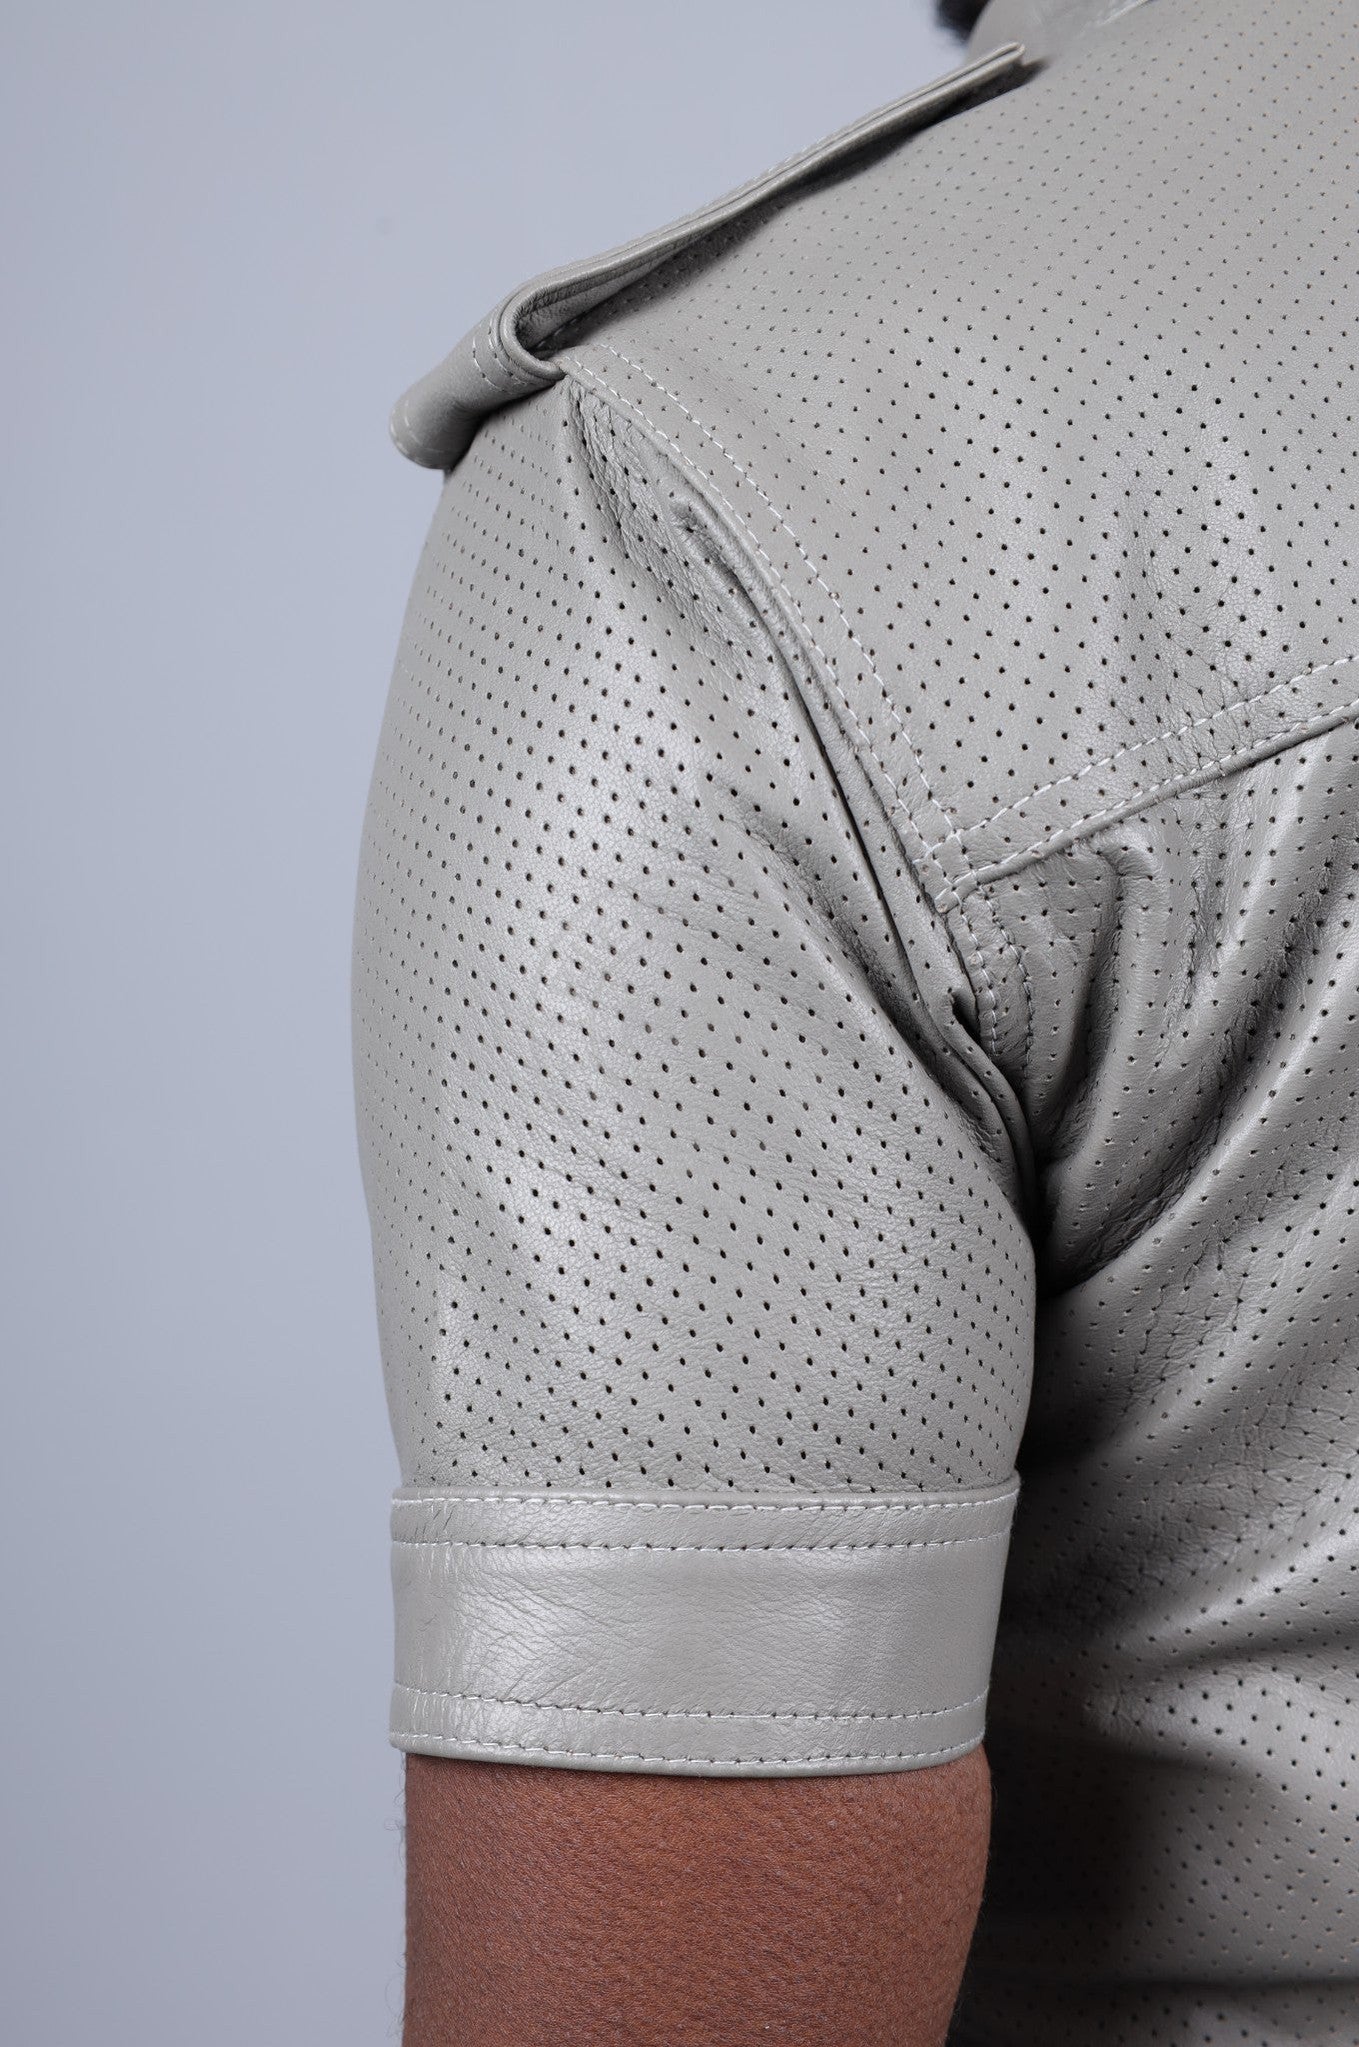 Ash Grey Leather Perforated Shirt-at MR. Riegillio